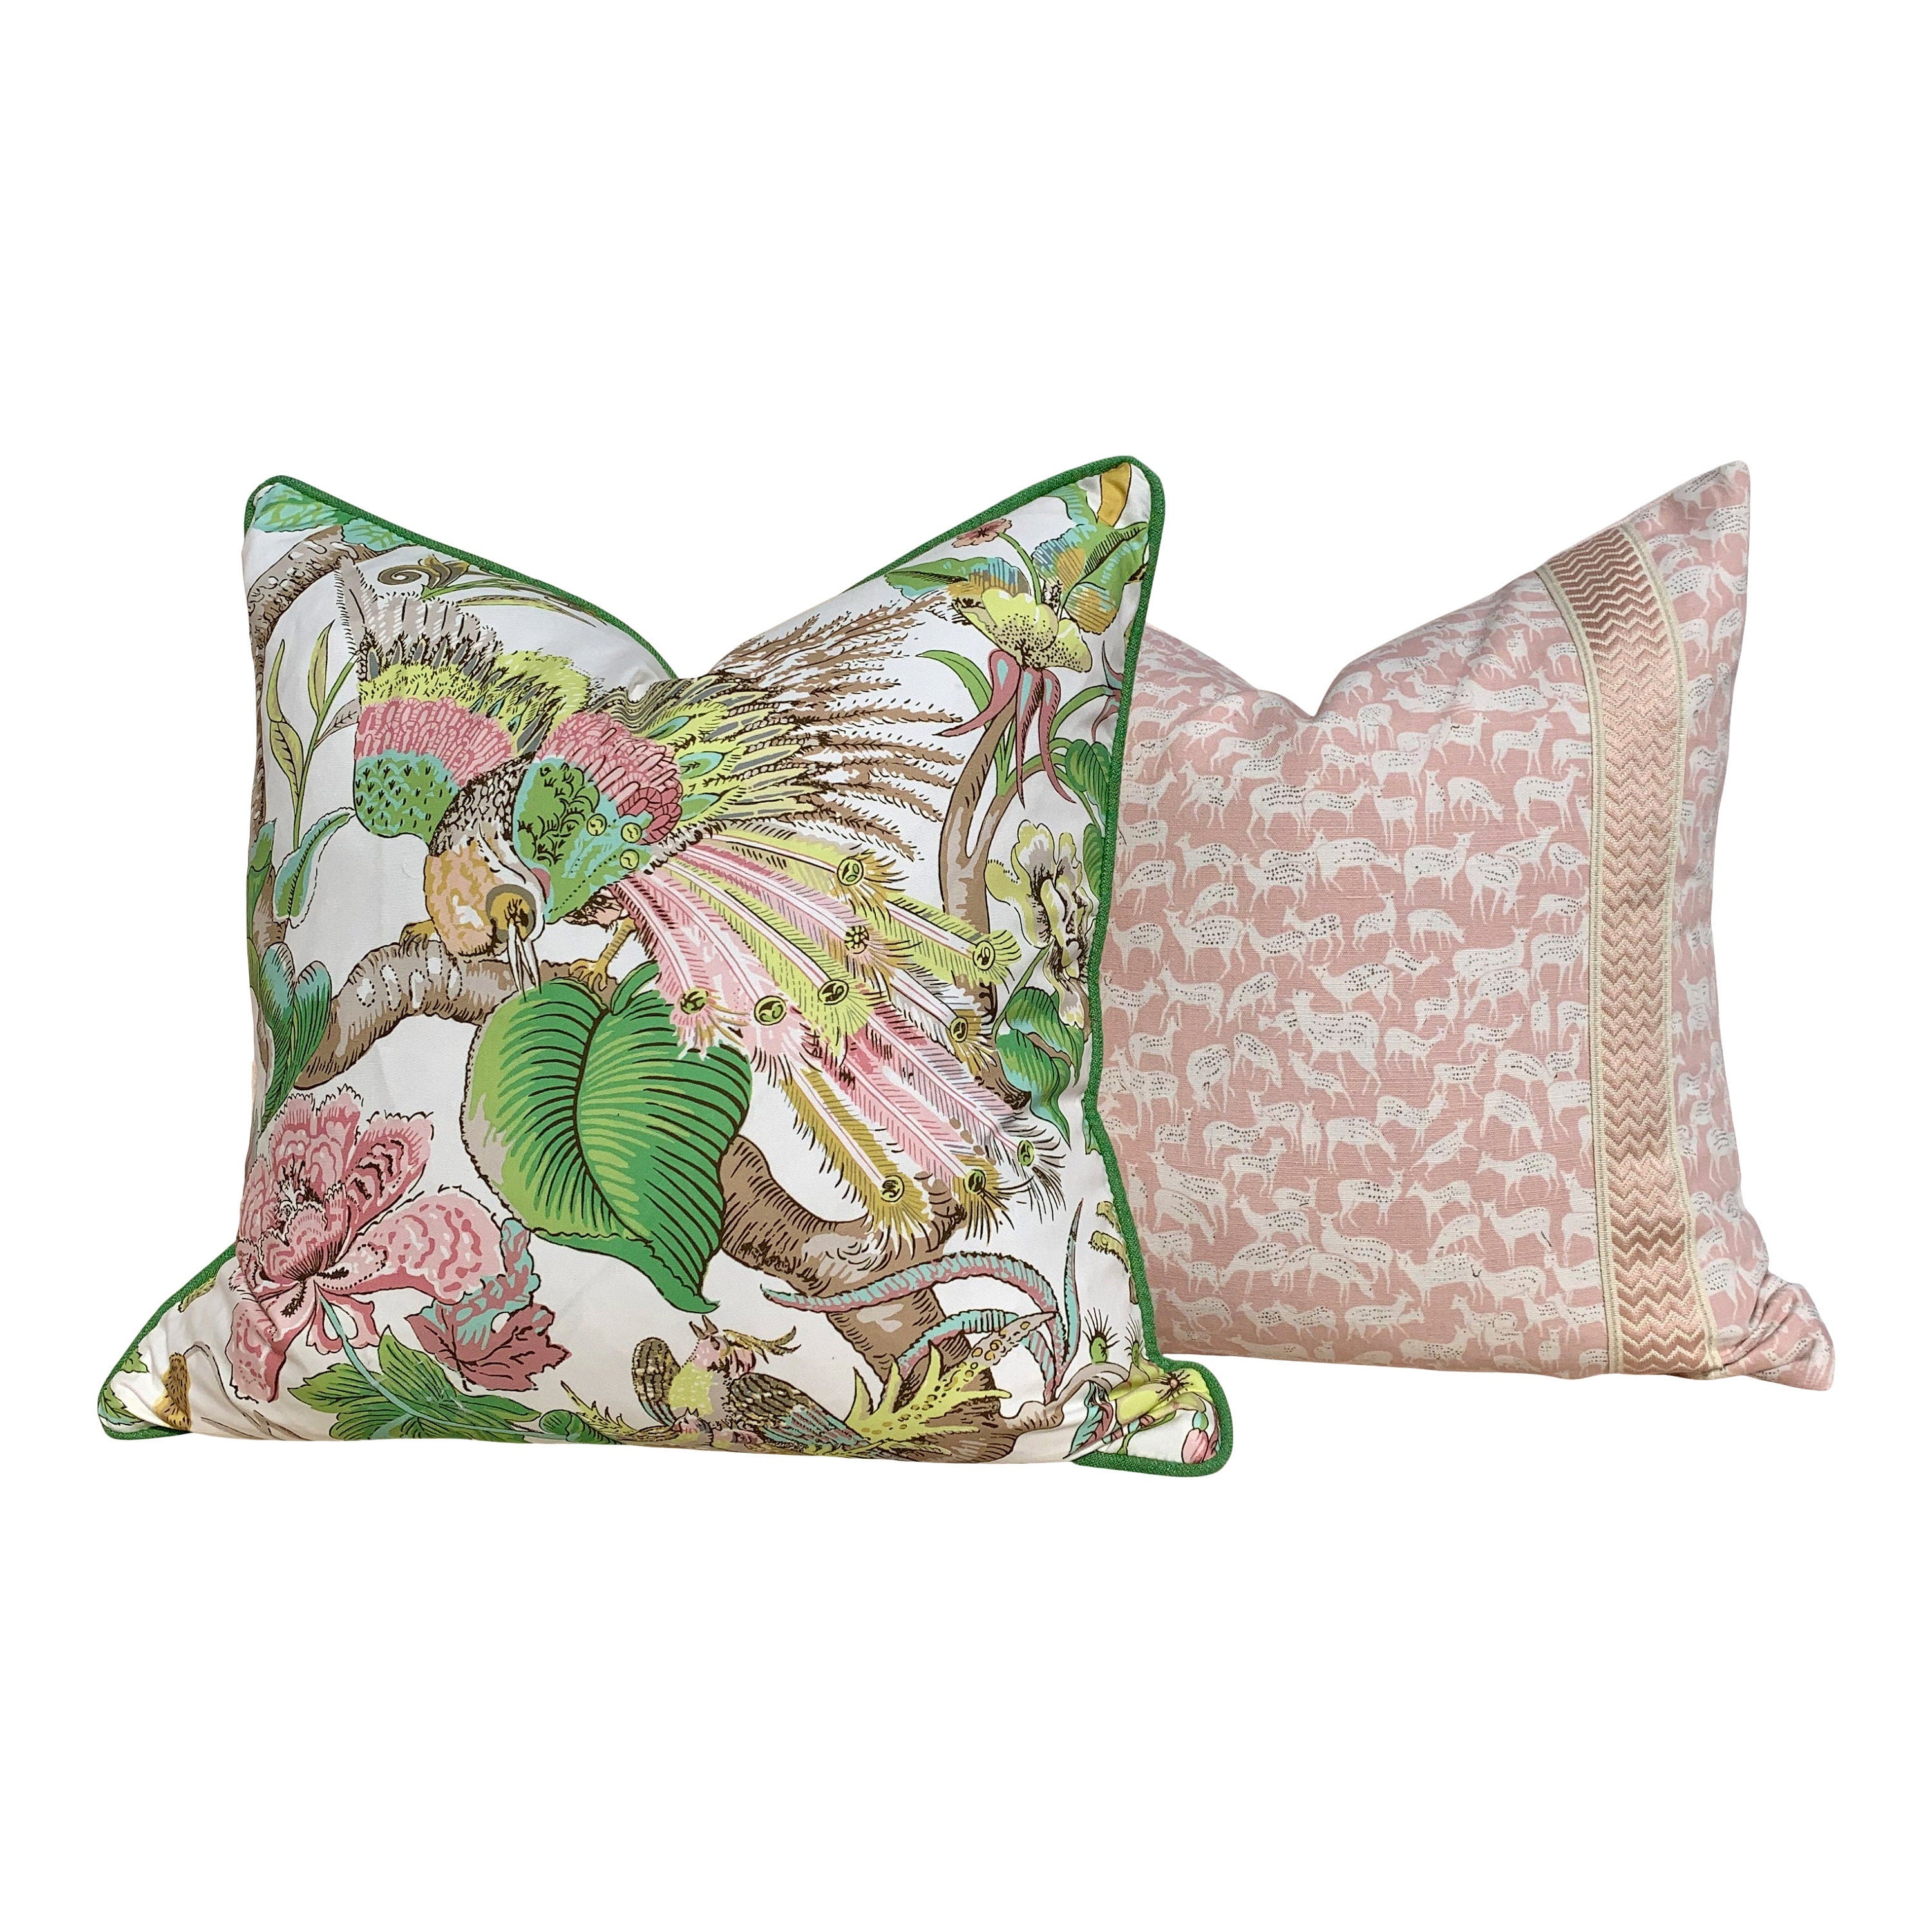 Schumacher Cranley Garden Green Pillow. Chinoiserie Green Pillow, Green Pink Pillow, Euro sham Cushion, Exotic Bird Accent Cushion Cover